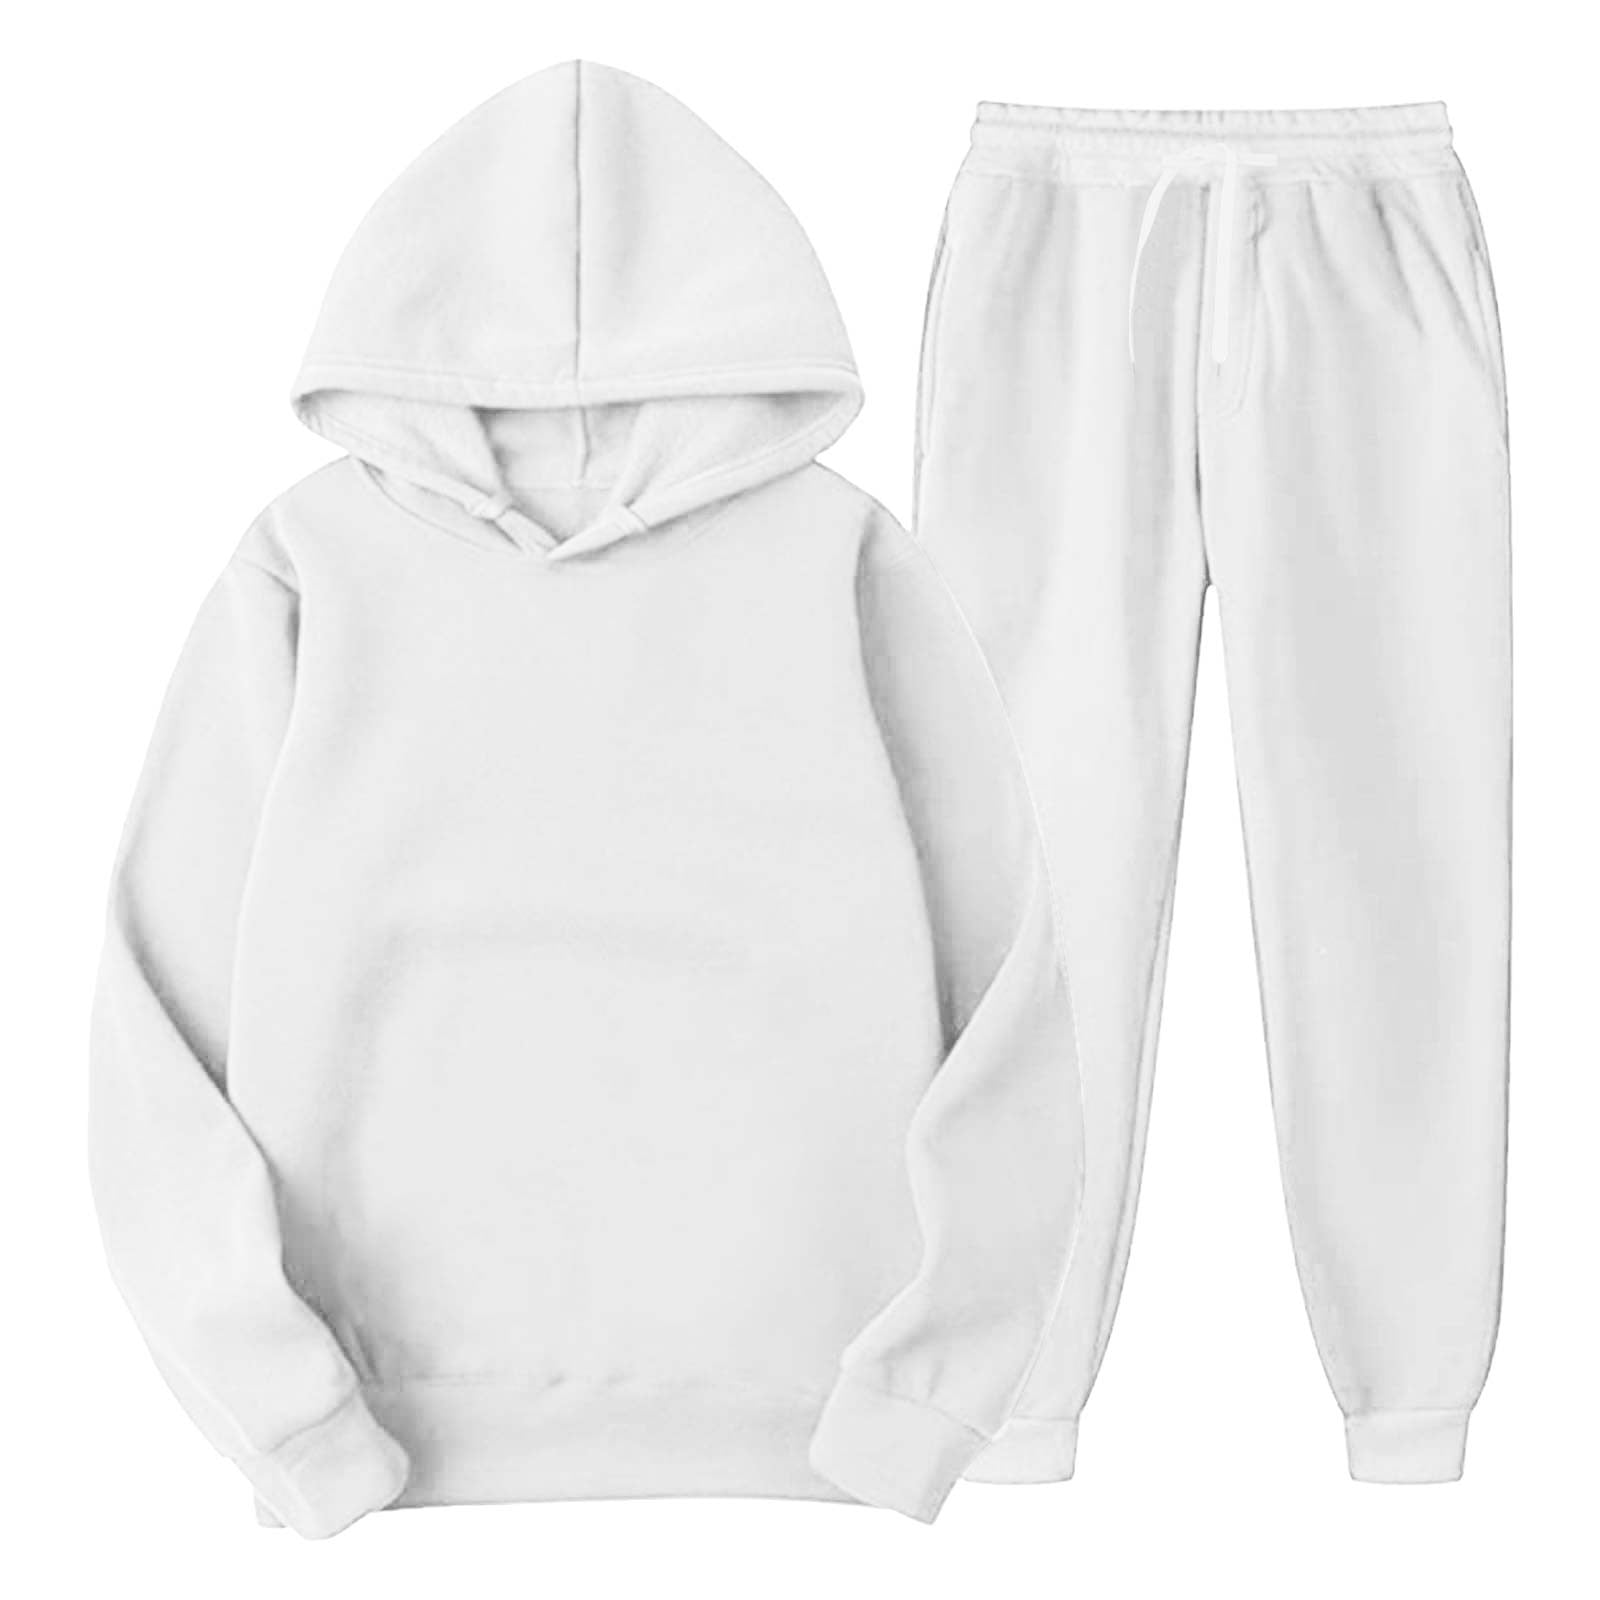 Women's Solid Color Sweatsuit Loose Hoodie Drawstring Sweatpants 2 Piece  Outfit Tracksuit Jogging Sport Sets (S, White) 